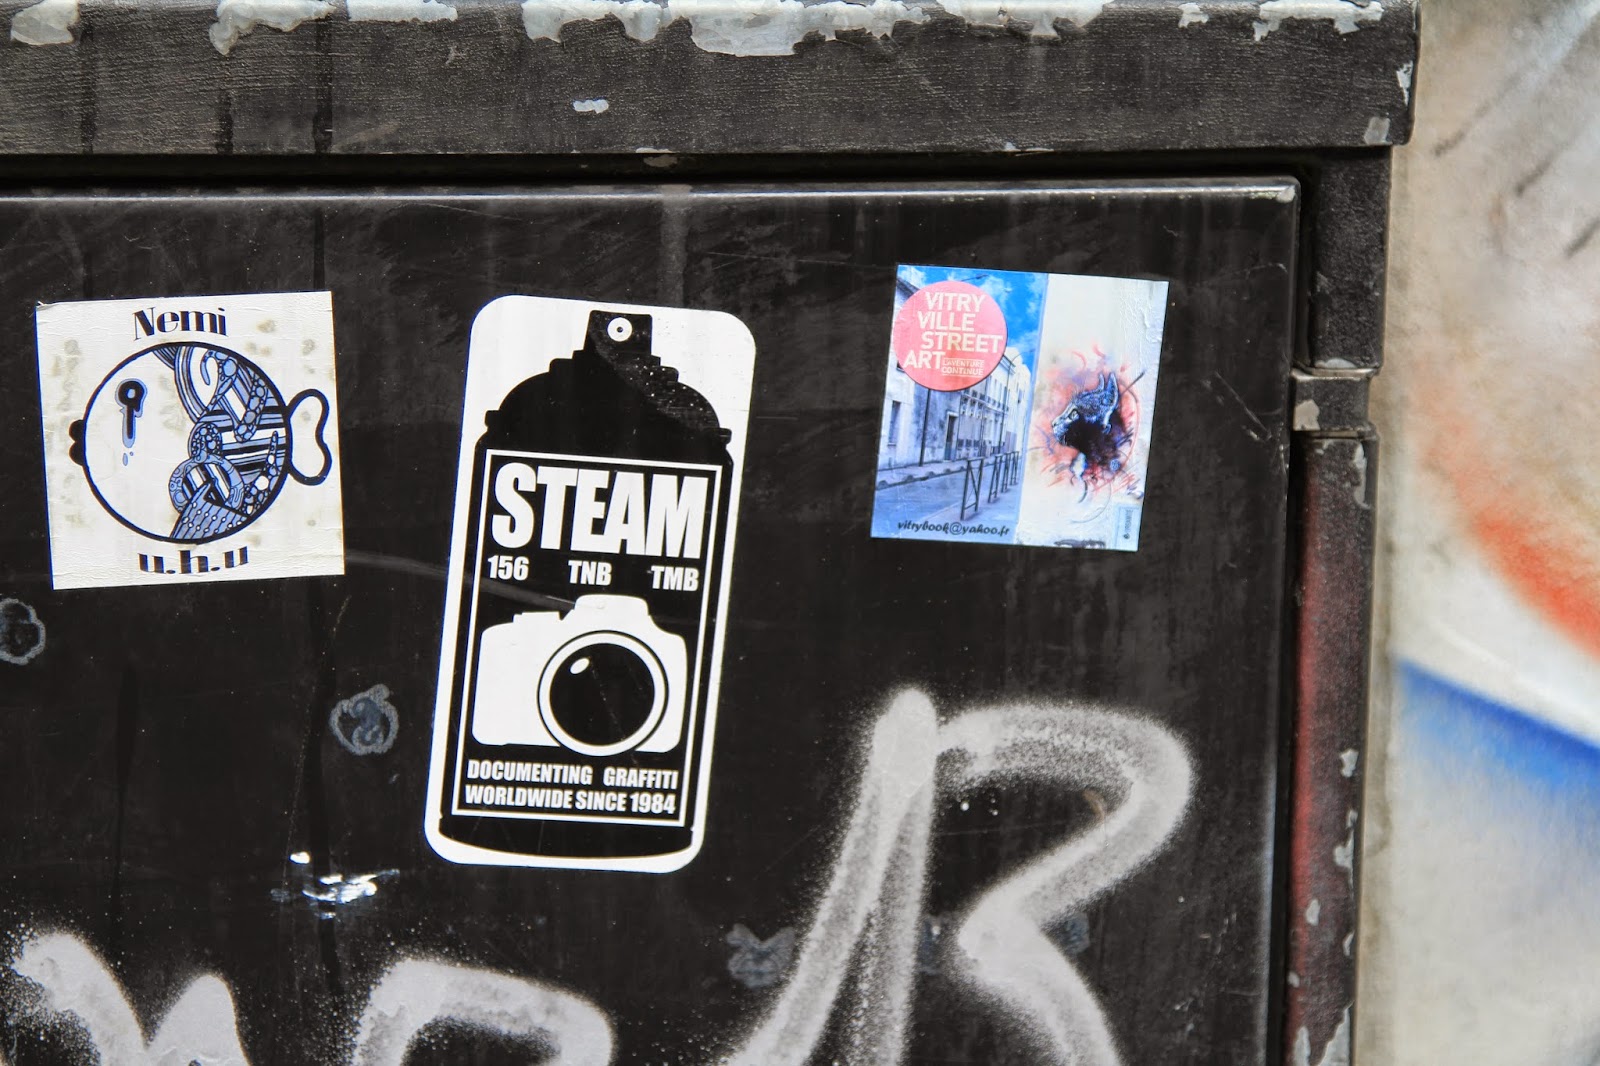 The Street Art Blog